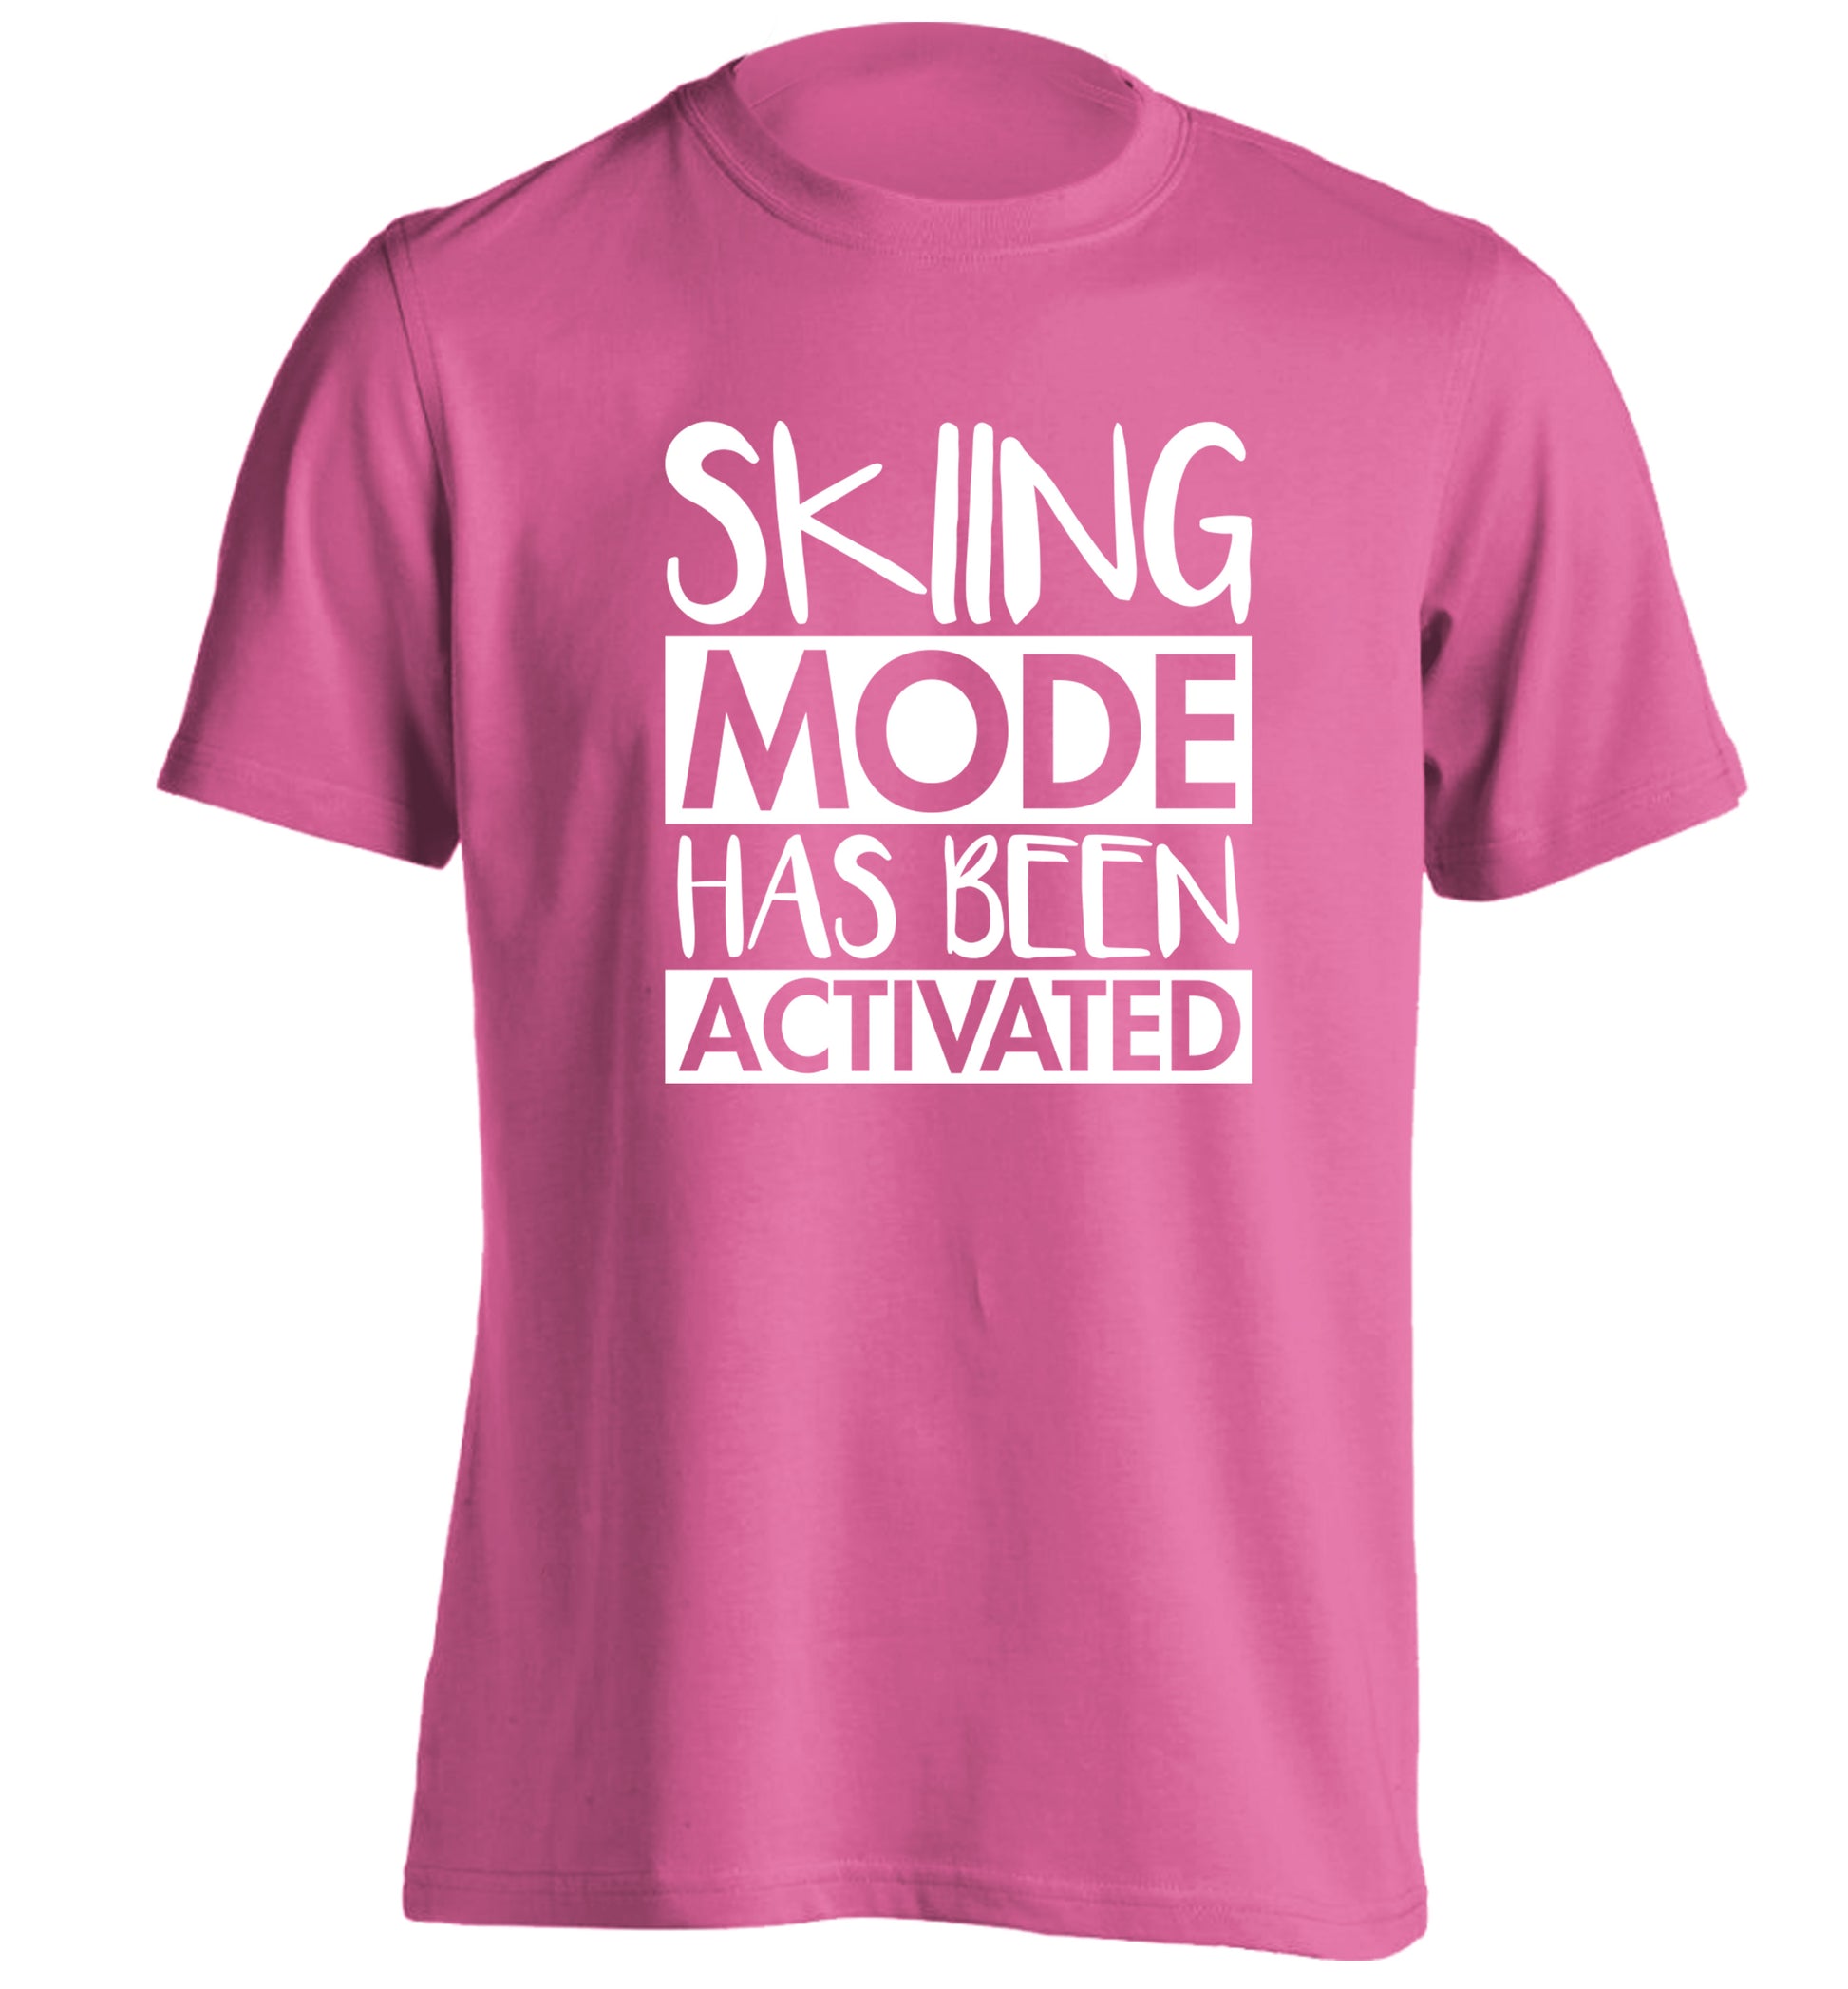 Skiing mode activated adults unisexpink Tshirt 2XL